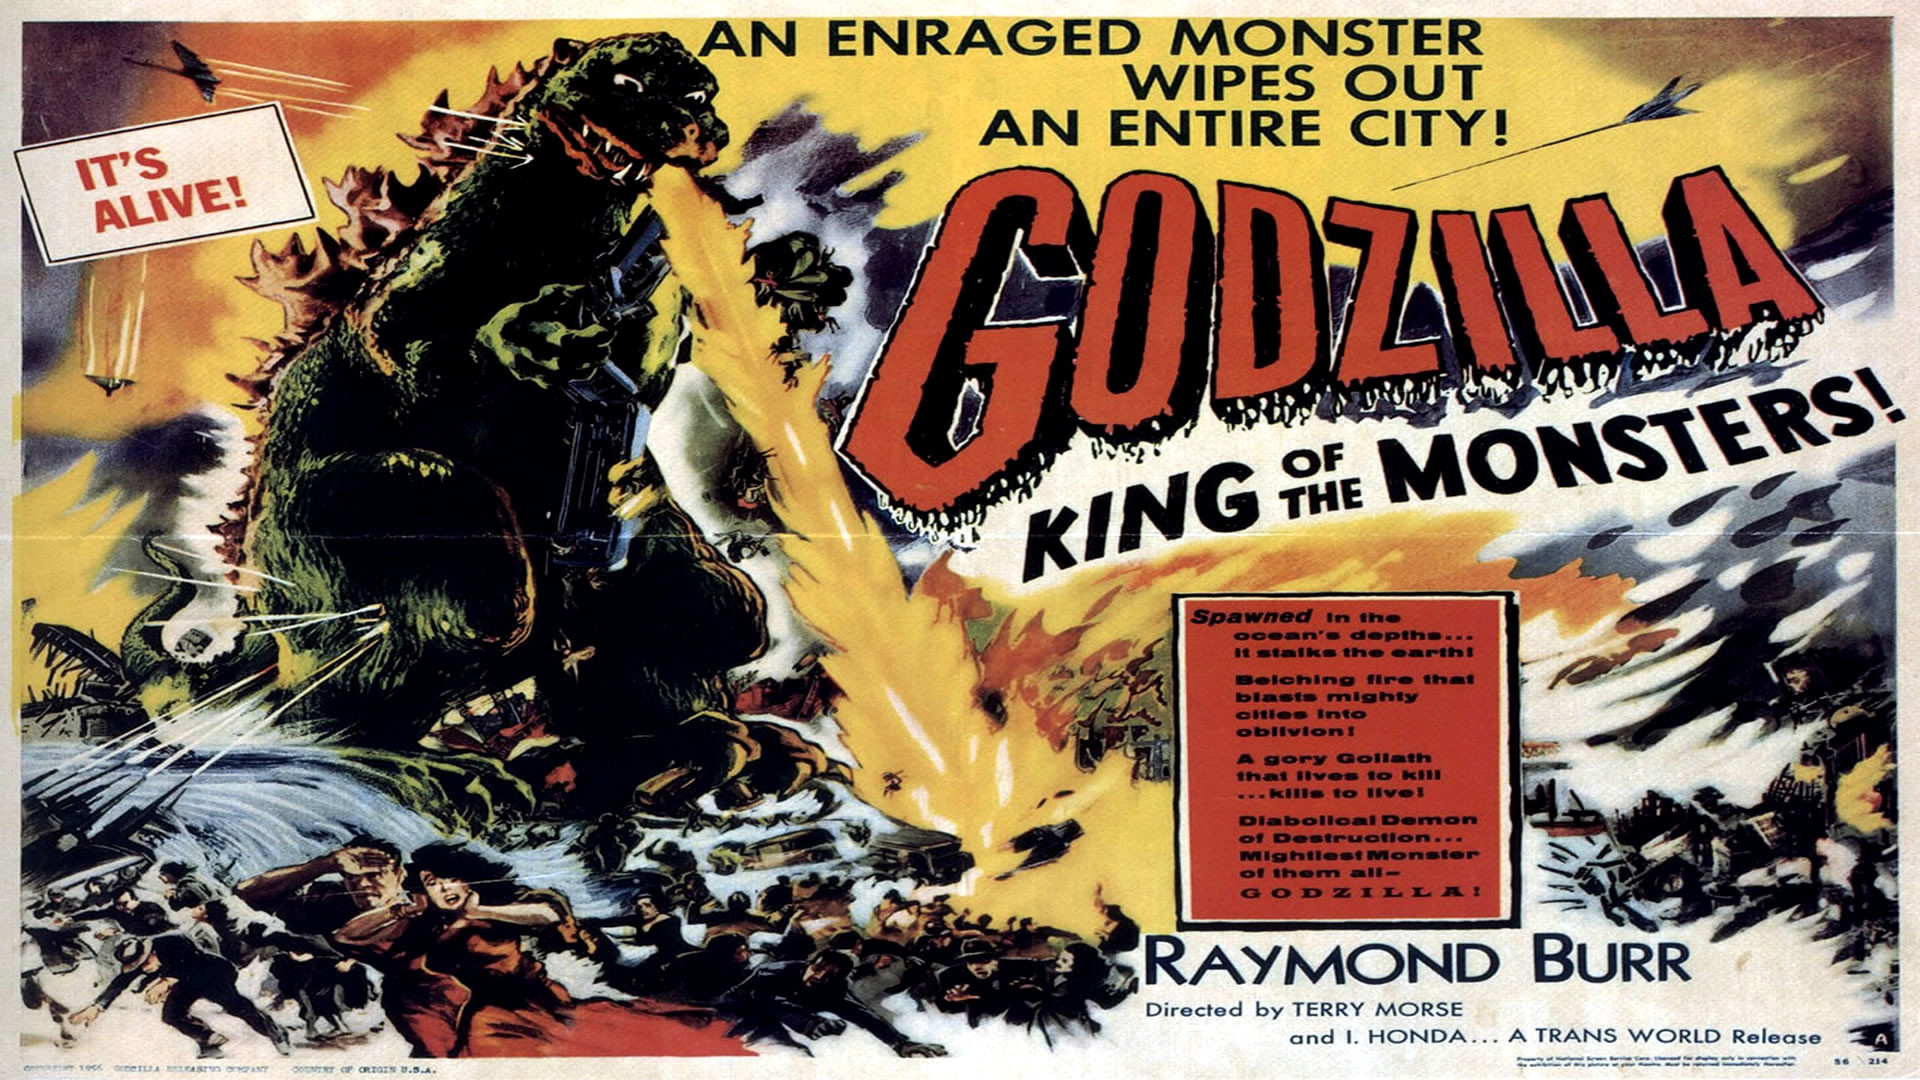 1920x1080 GODZILLA Landscape Monster B Movie Posters Wallpaper Image 